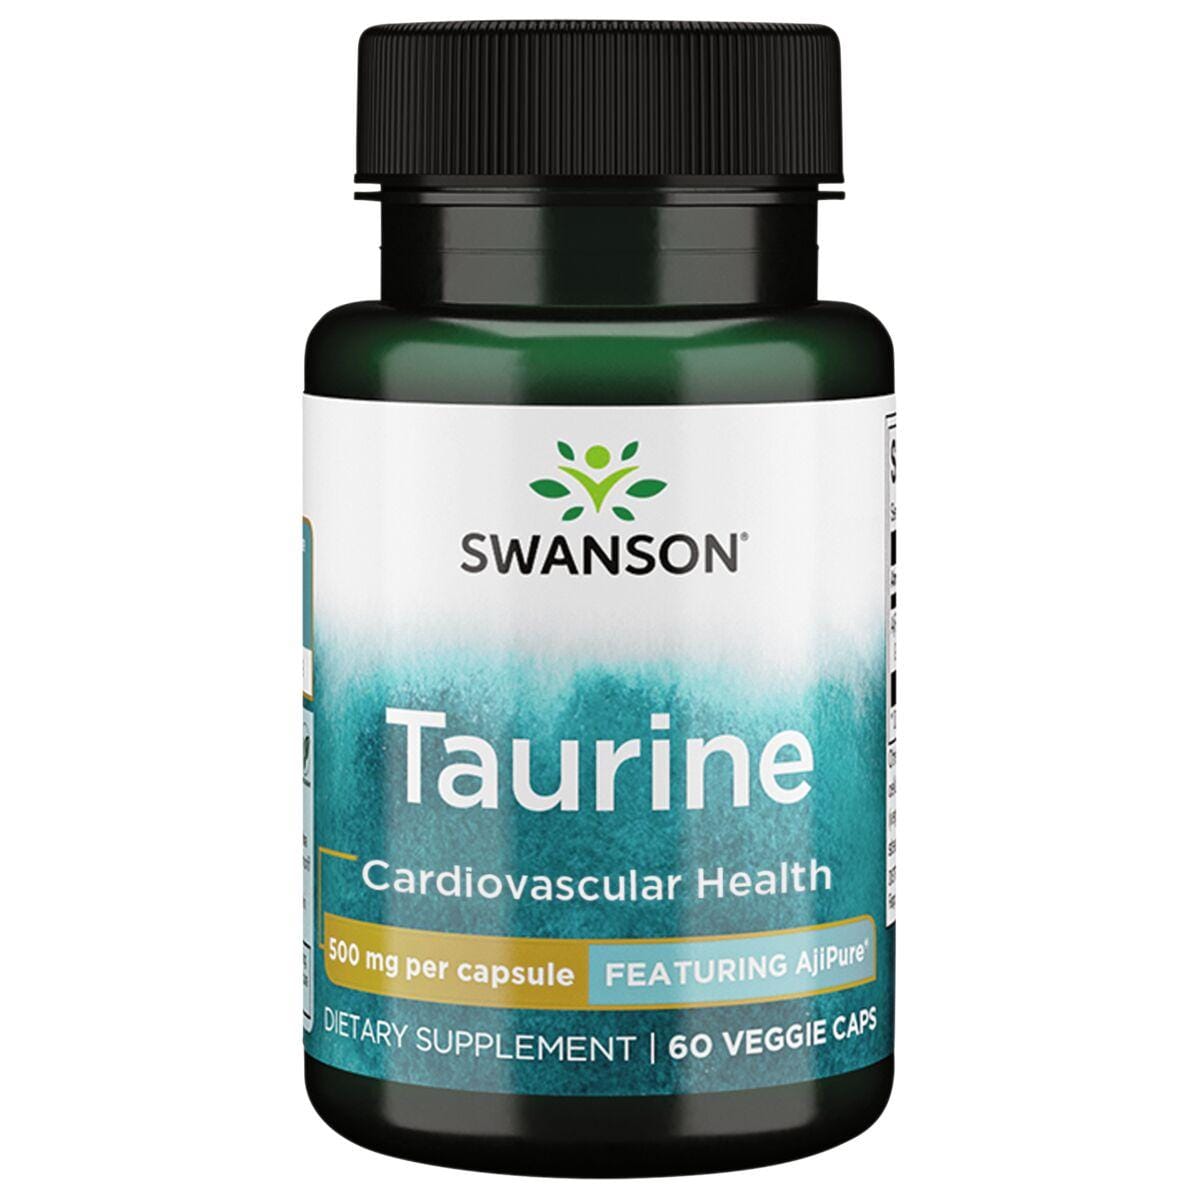 Swanson Ultra Taurine - Featuring Ajipure Supplement Vitamin 500 mg 60 Veg Caps